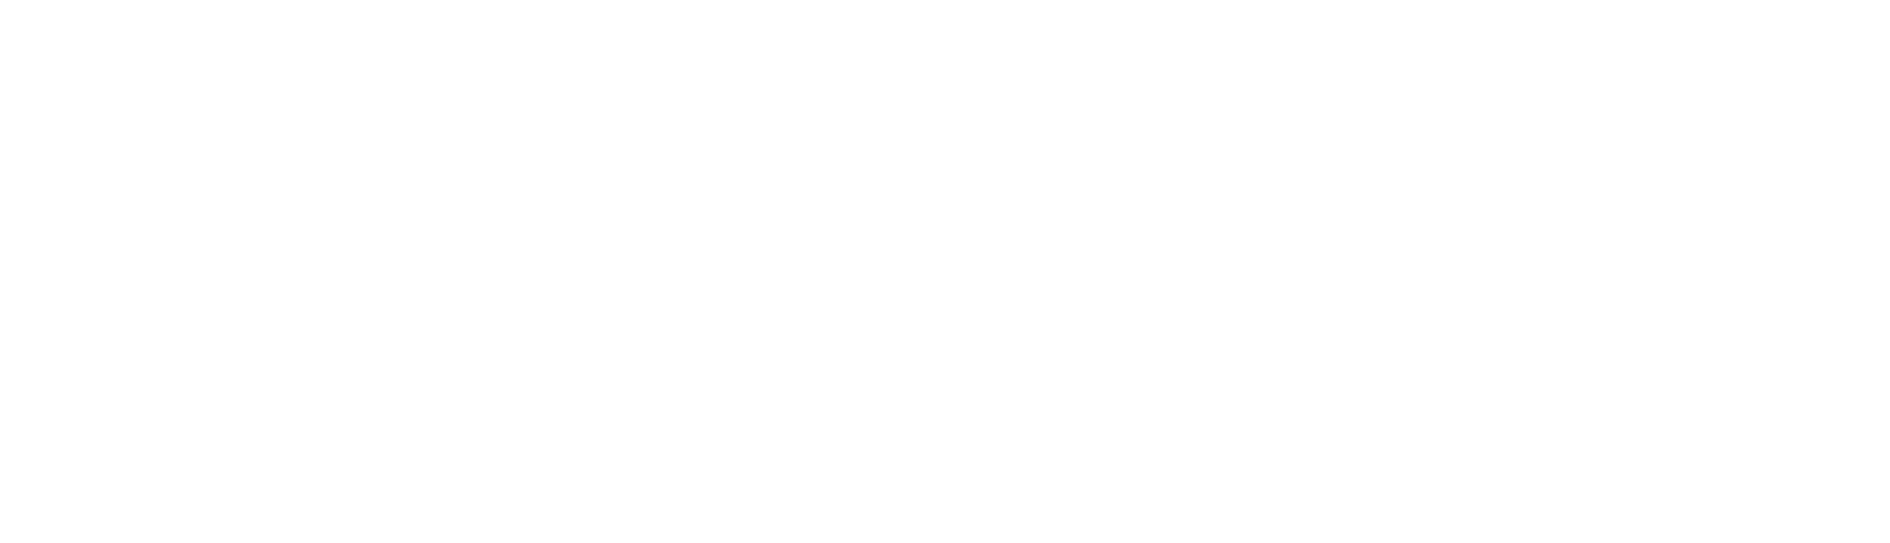 Jocelyn's Provisions